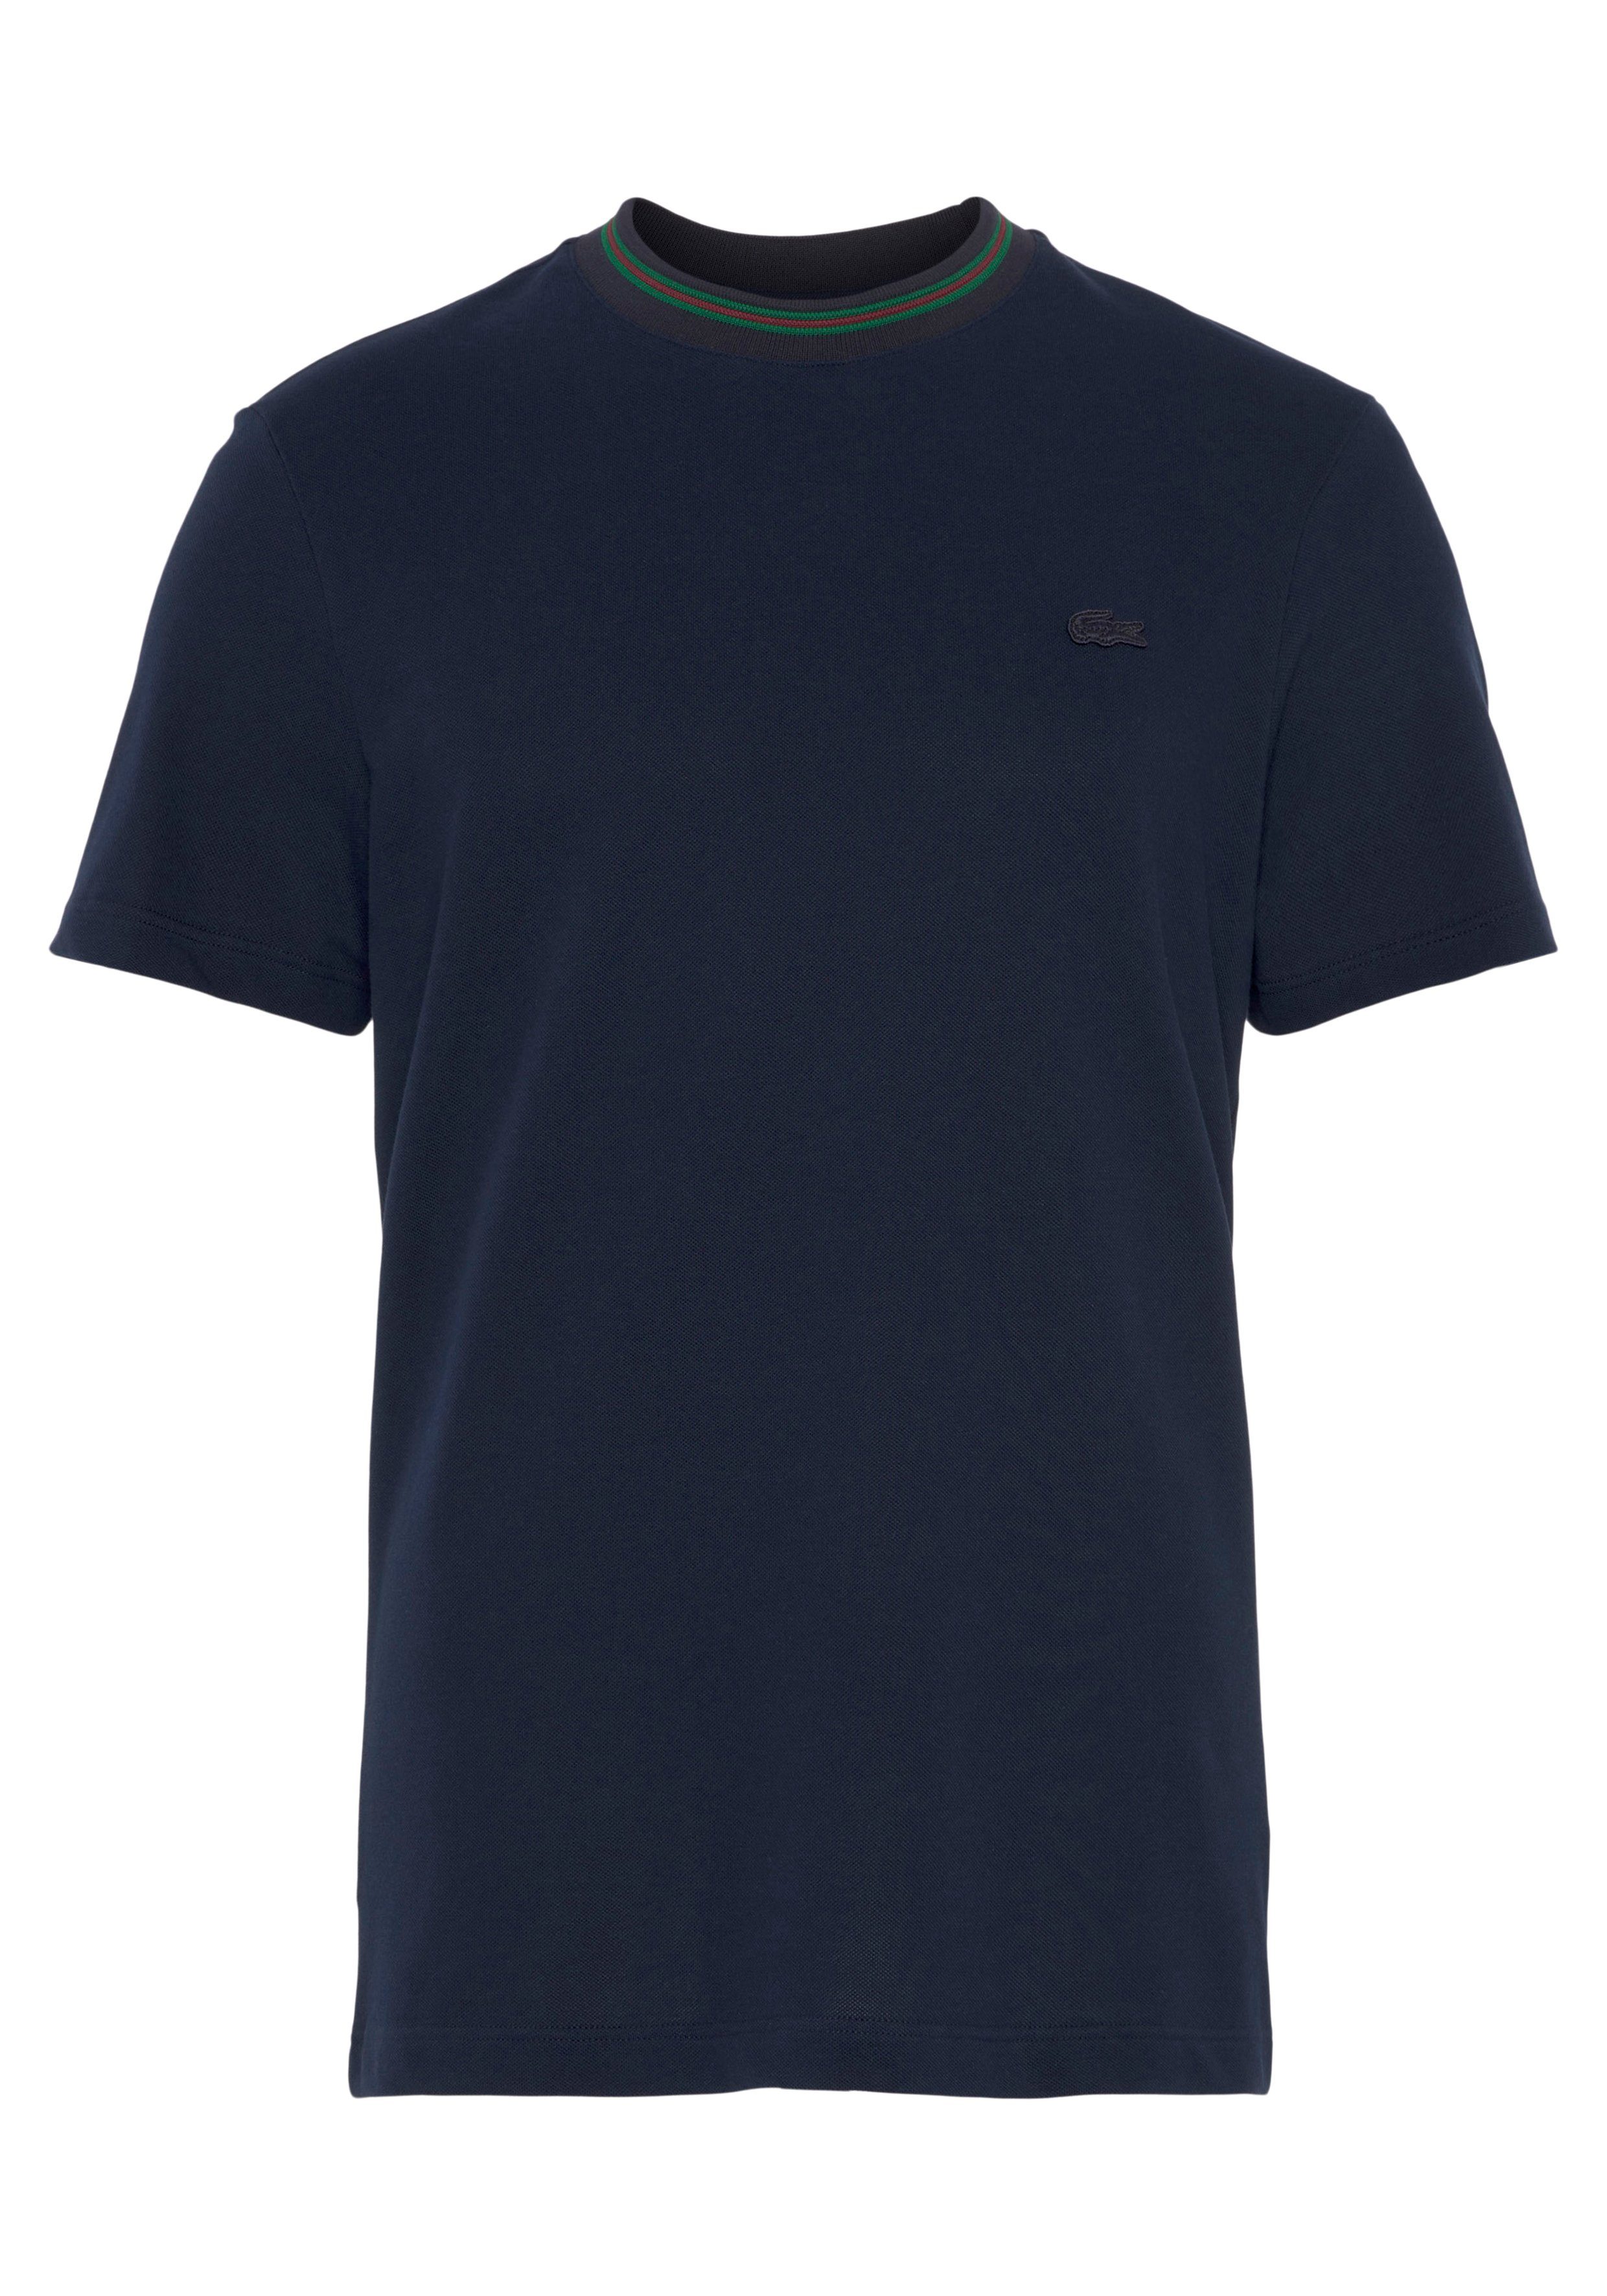 Lacoste T-Shirt T-SHIRT mit Rundhalsausschnitt NAVY BLUE